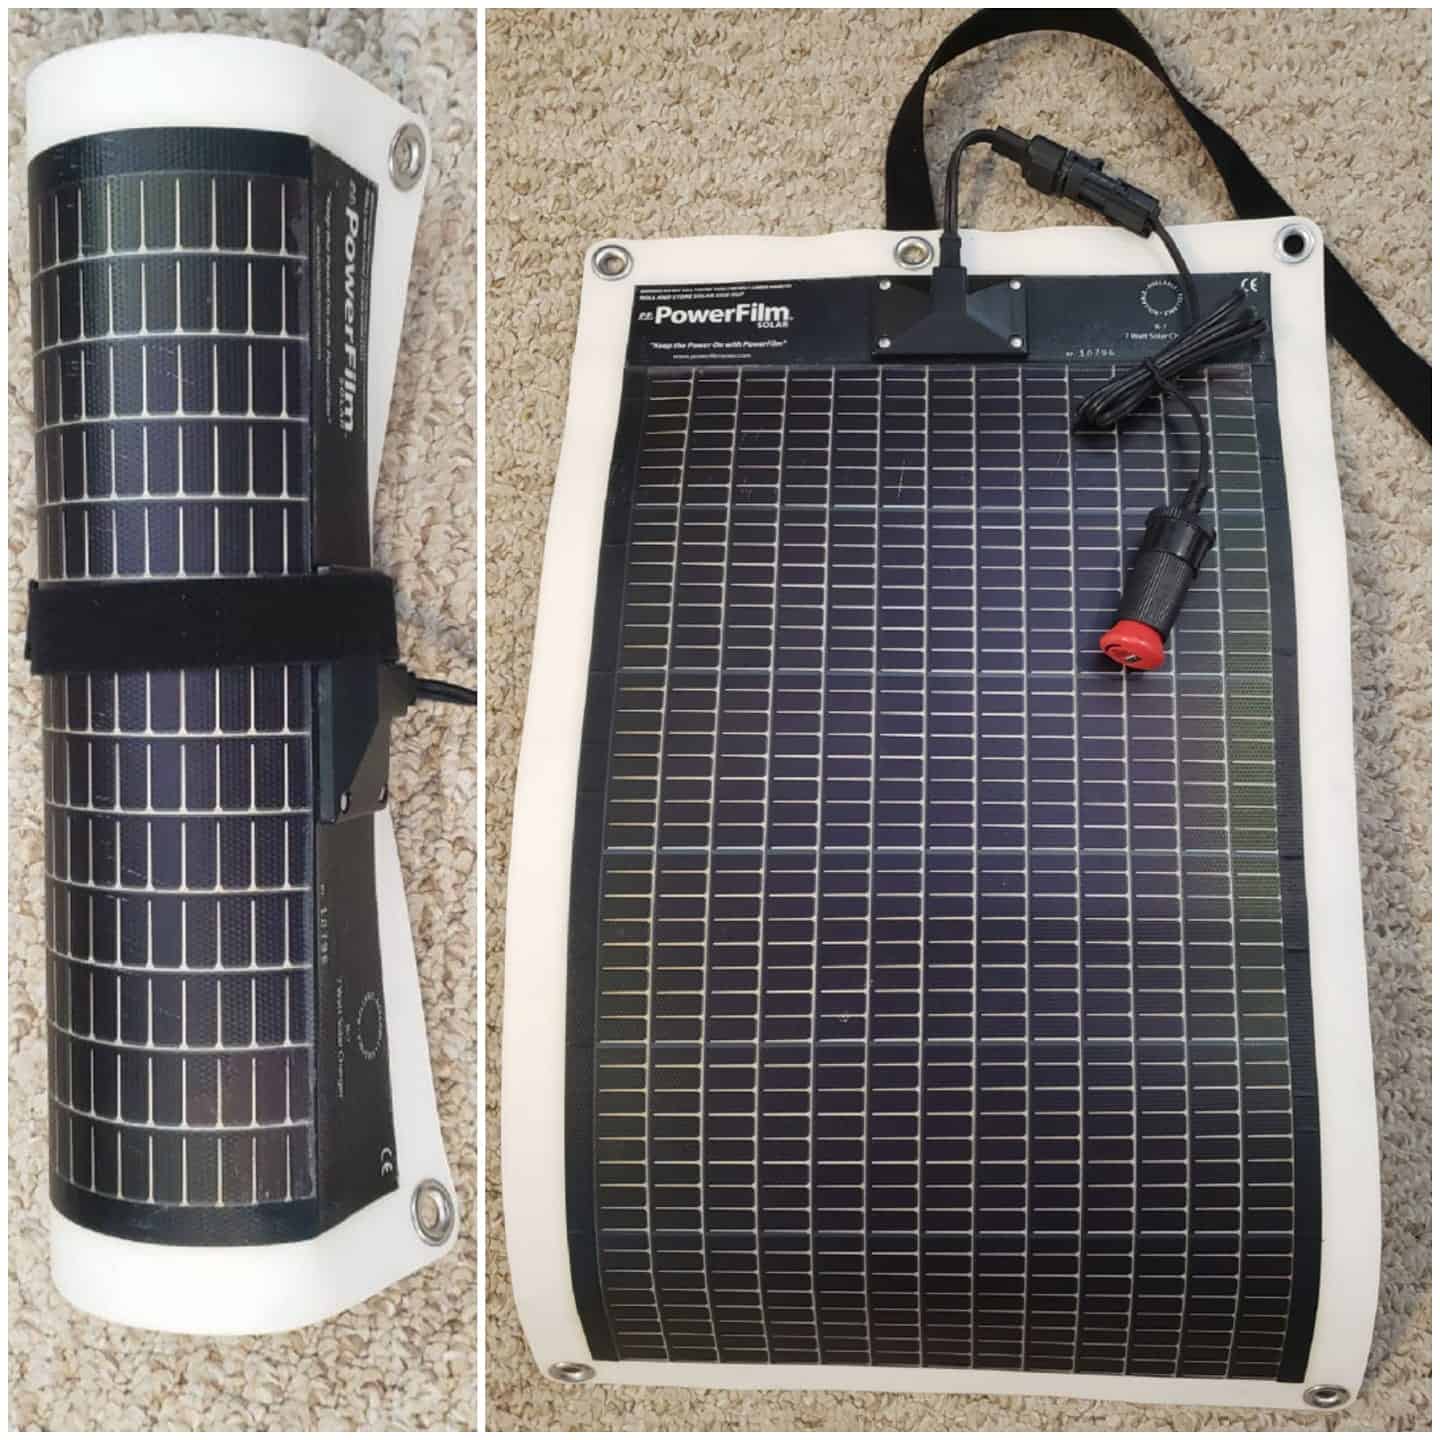 100 Watt Flexible Solar Panel